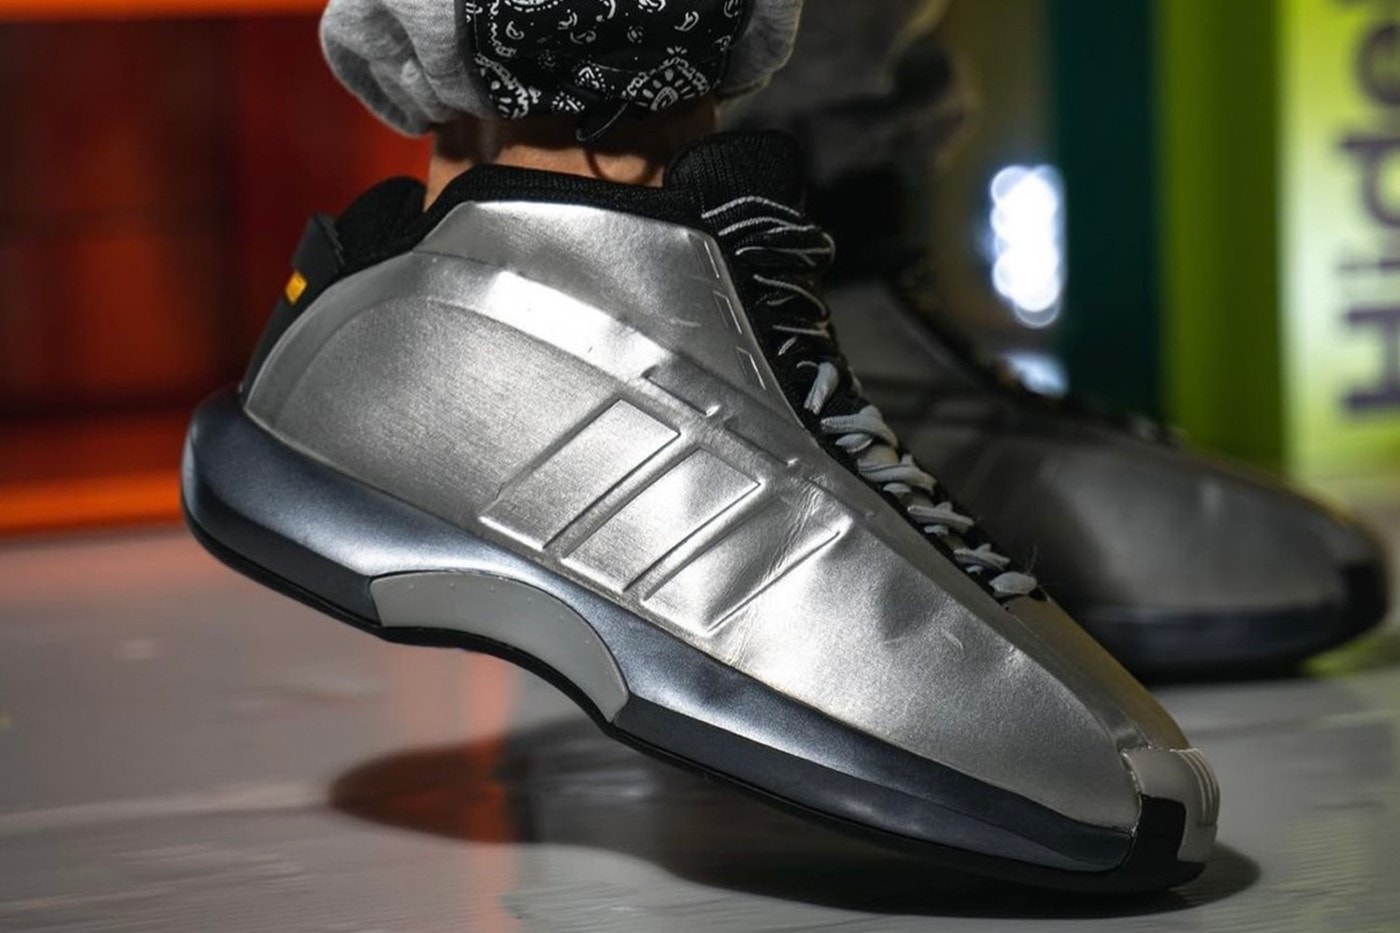 近賞 Kobe Bryant 簽名球鞋復刻 adidas Crazy 1 OG「Metallic Silver」